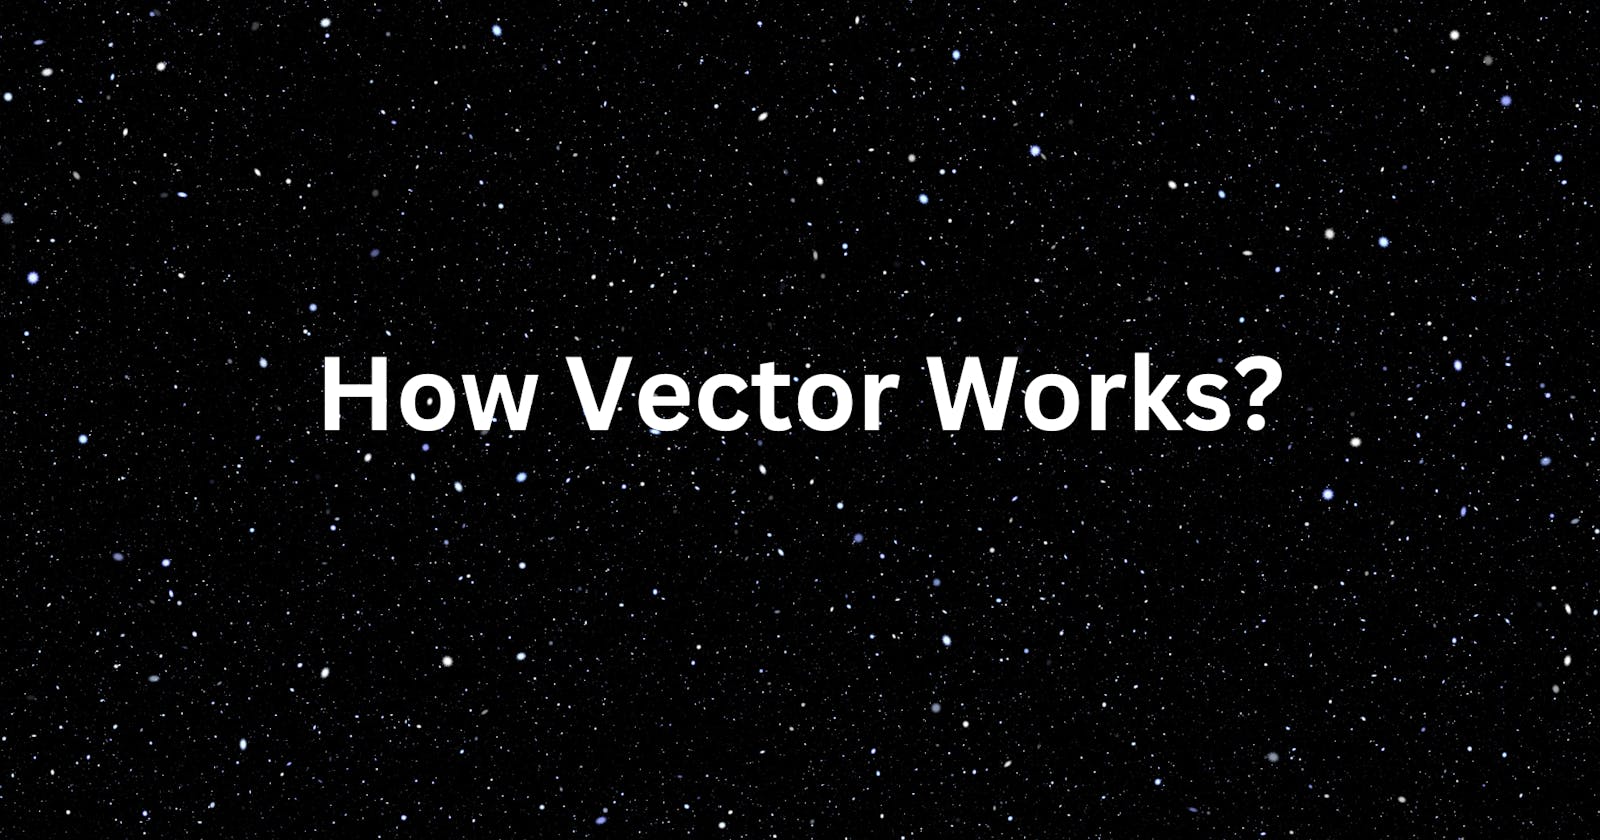 How vector works internally in C++?